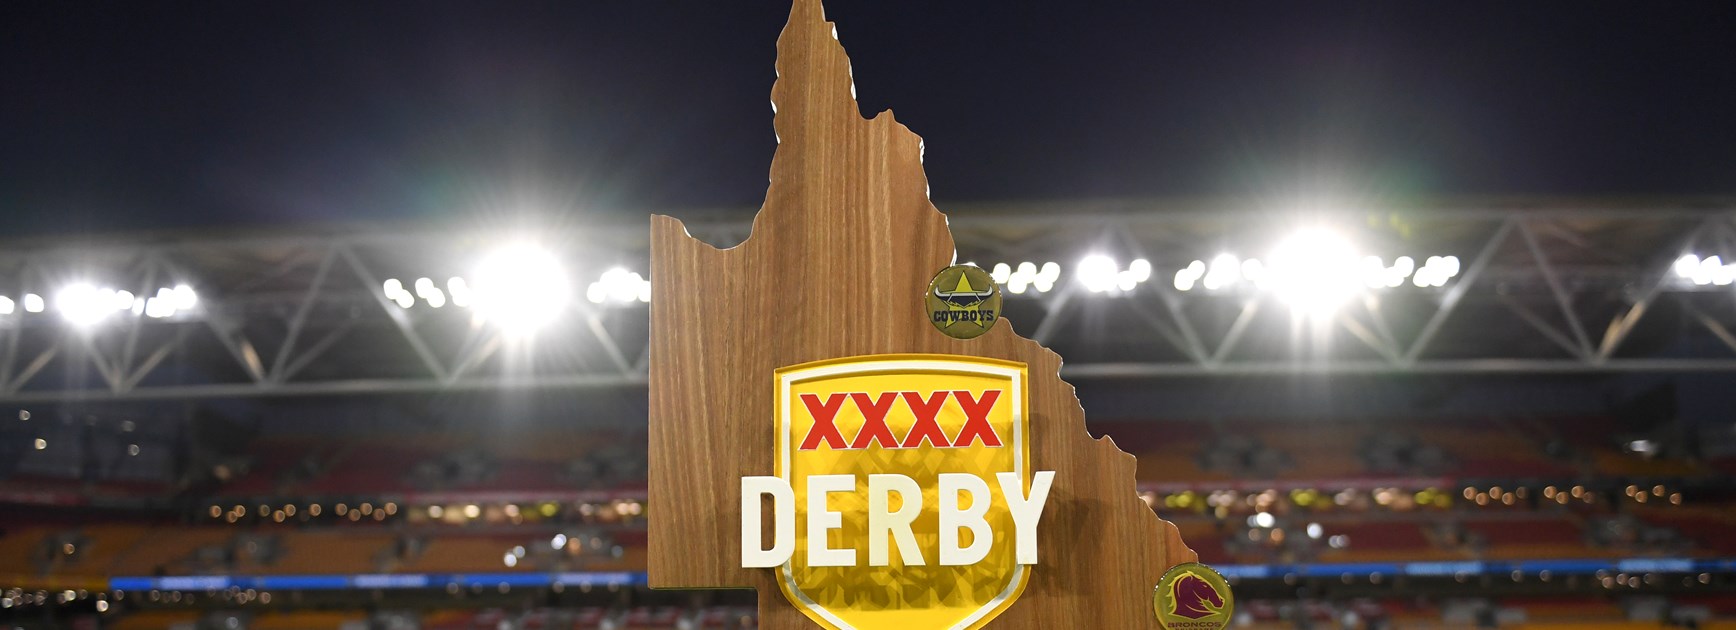 Broncos final team list: XXXX Derby v Cowboys